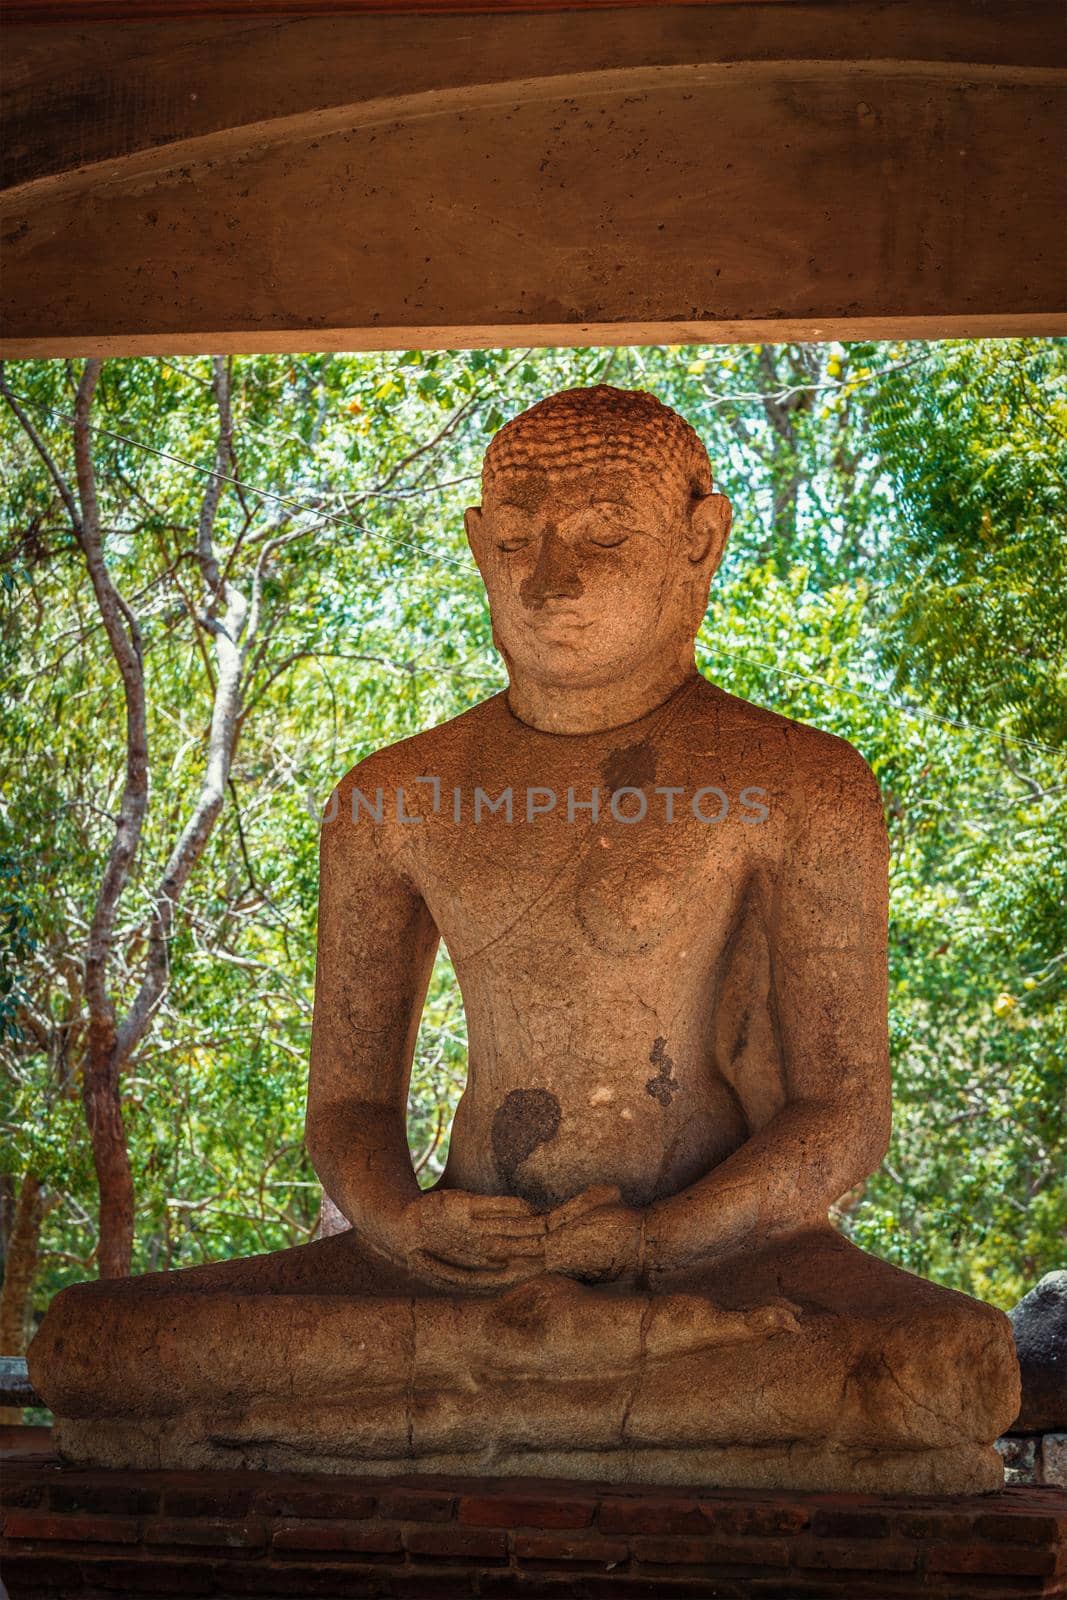 Samadhi Buddha statue in Anuradhapura - famous tourist attraction and archaelogical site, Sri Lanka by dimol